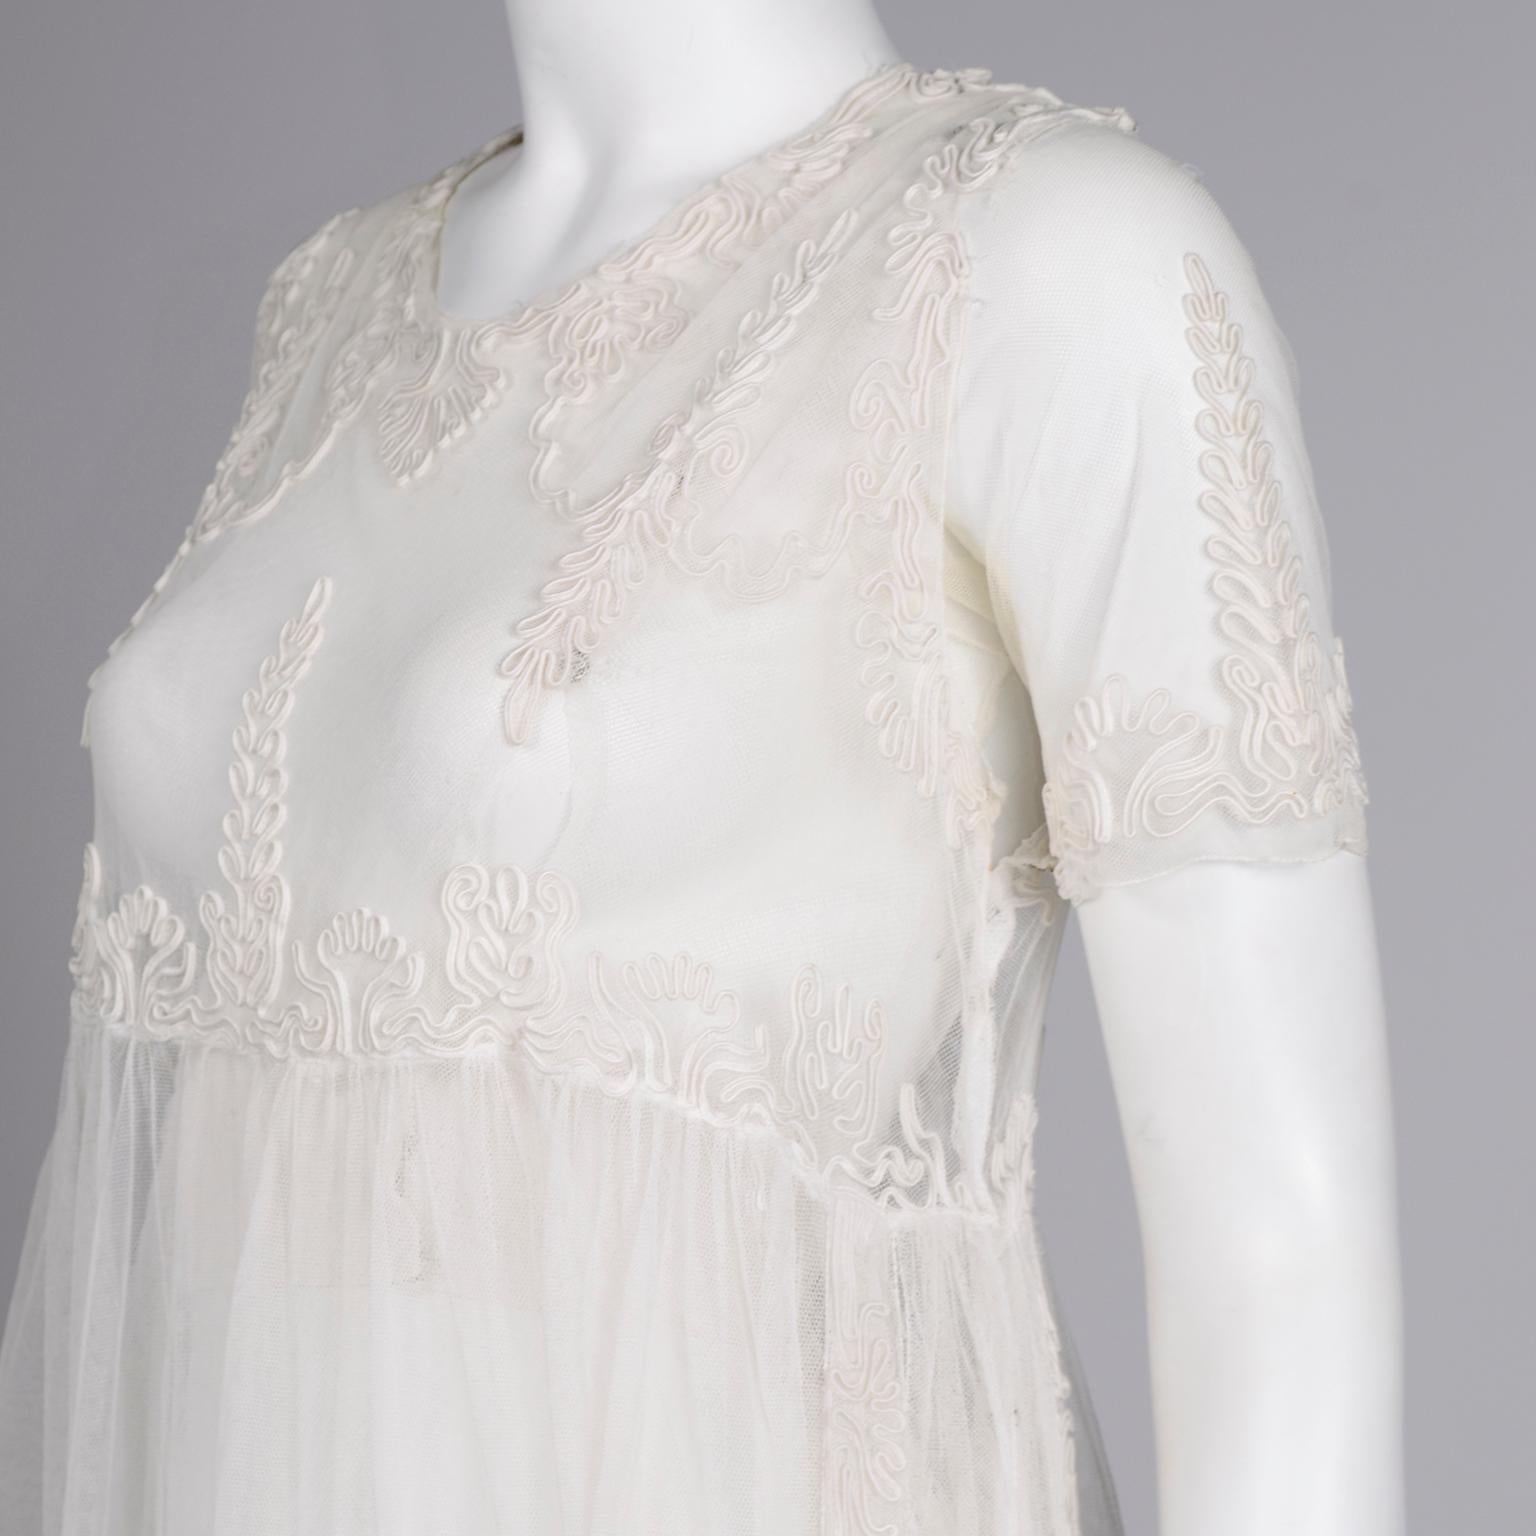 Antique Edwardian 1910s Vintage Ivory Net Tulle Dress W Soutache Embroidery Trim For Sale 6